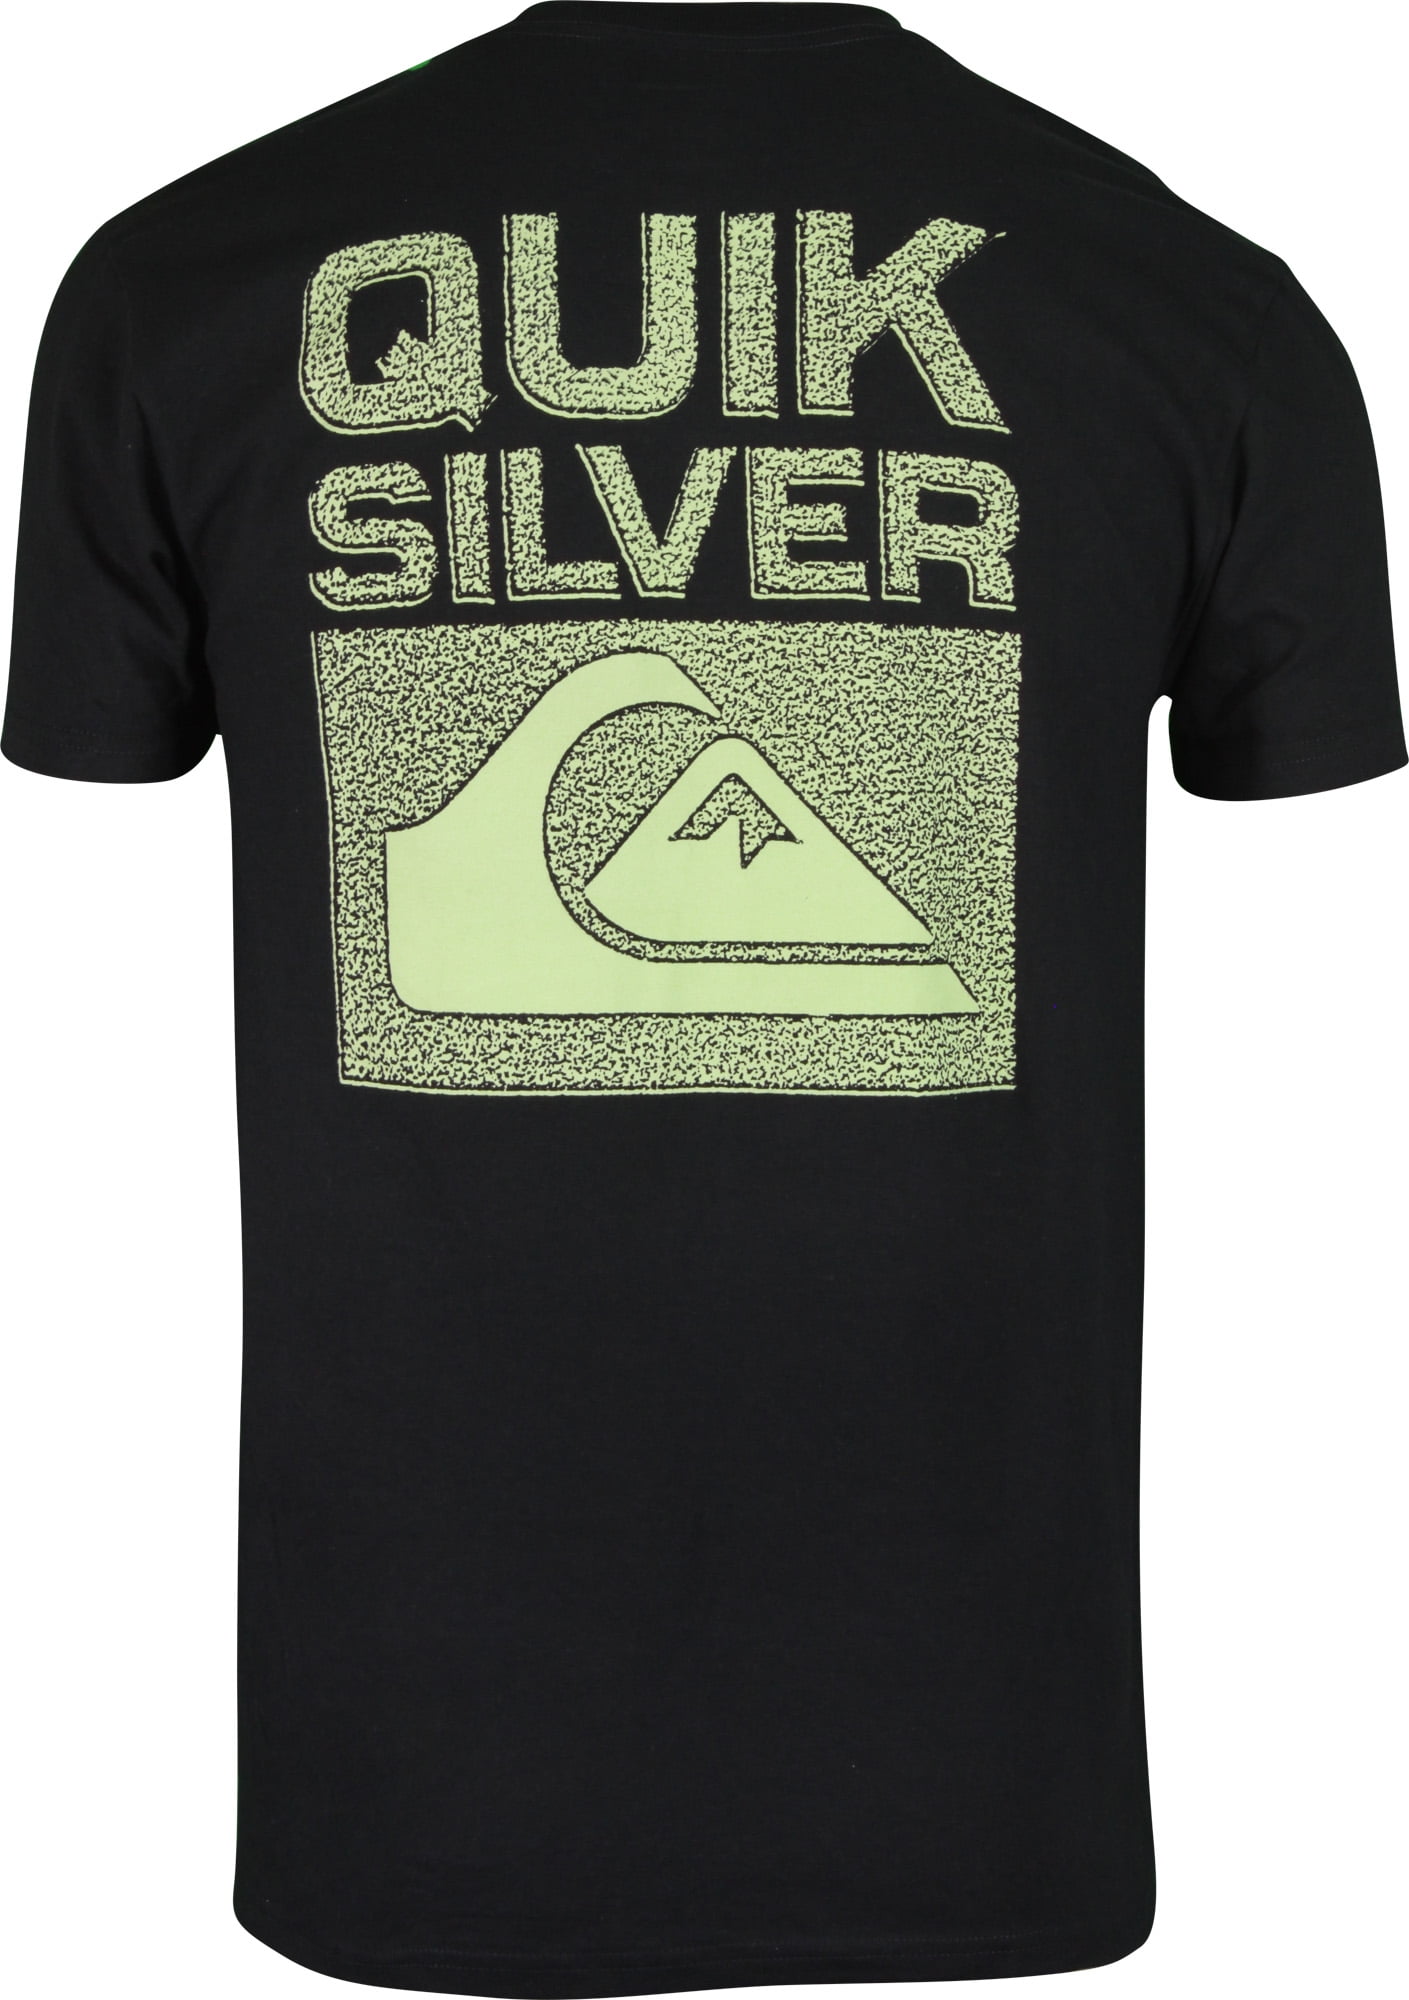 Quiksilver Mens Pixel Screen T-Shirt - Black